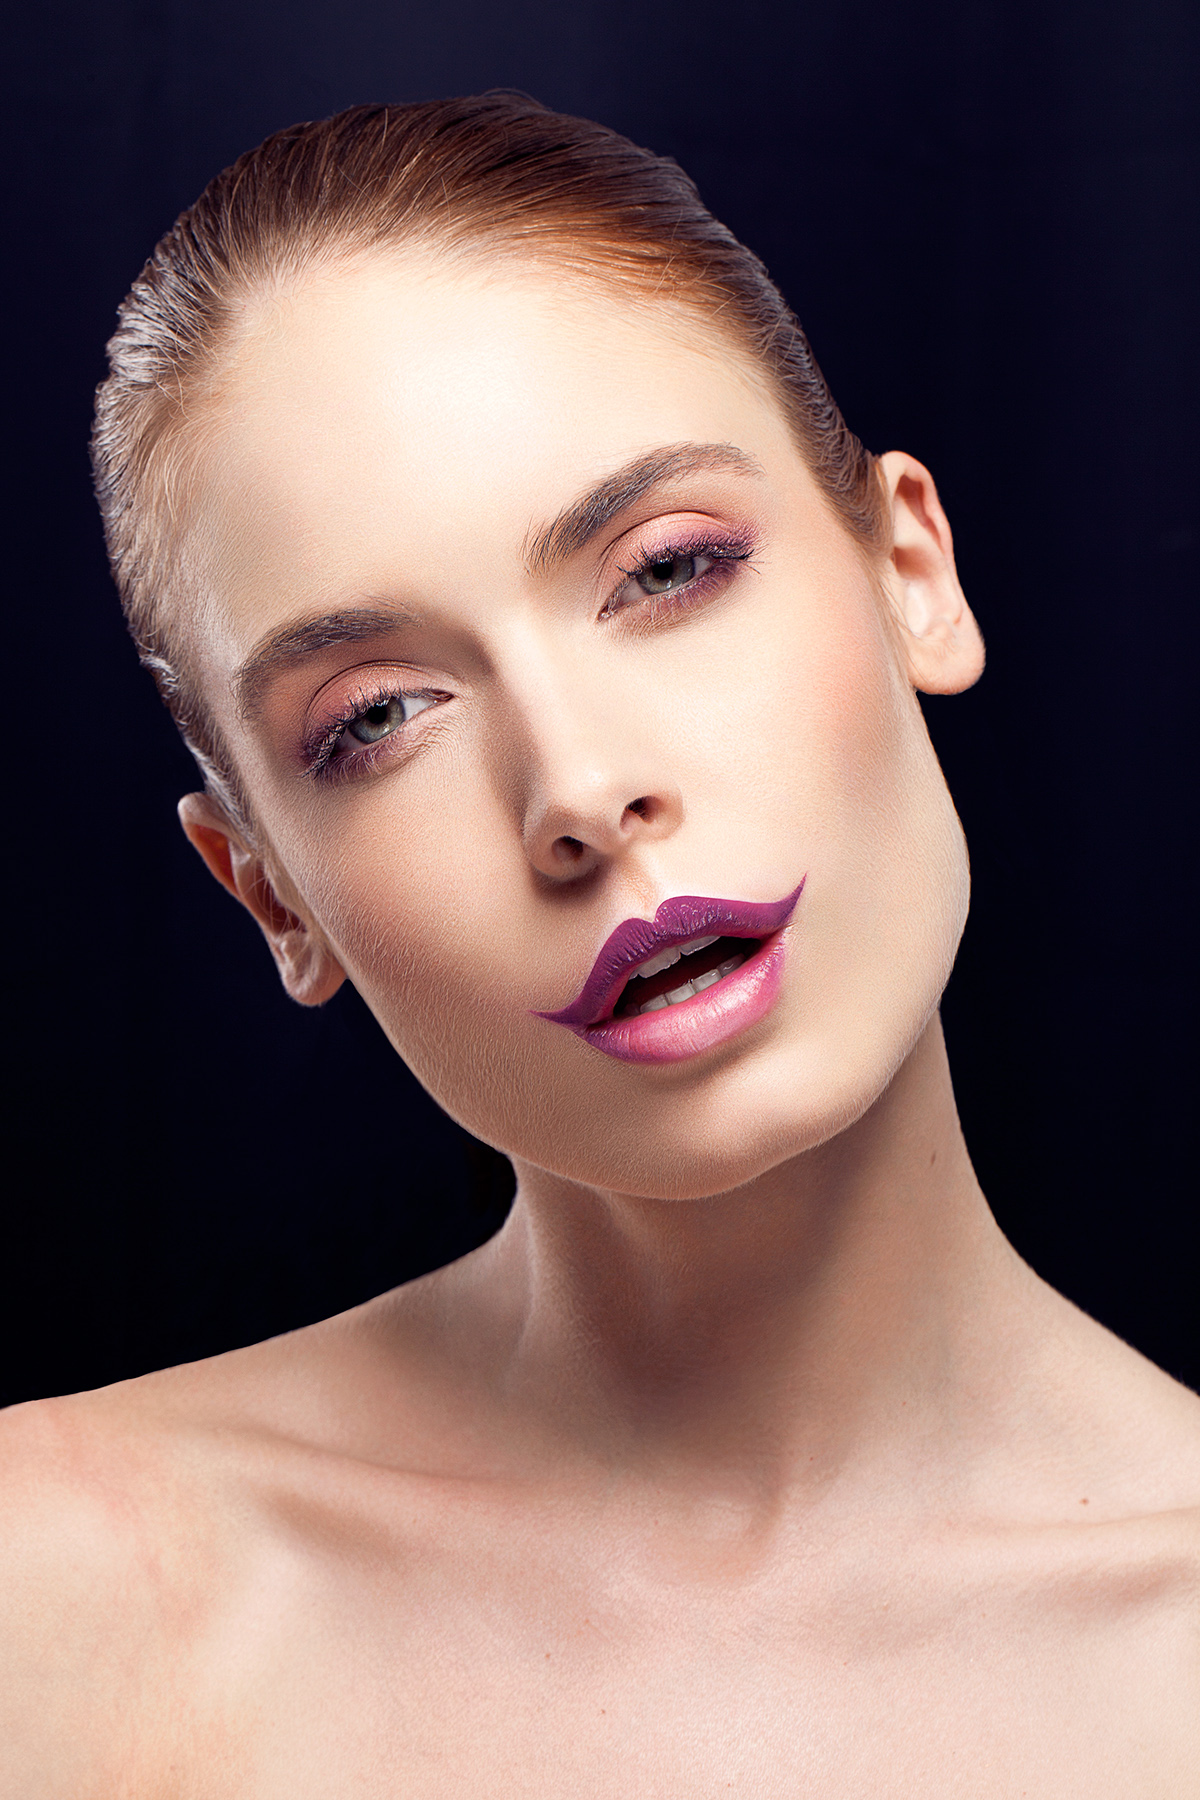 beauty makeup Make Up MUA hair skin portrait closeup girl studio retouch purple color expressive